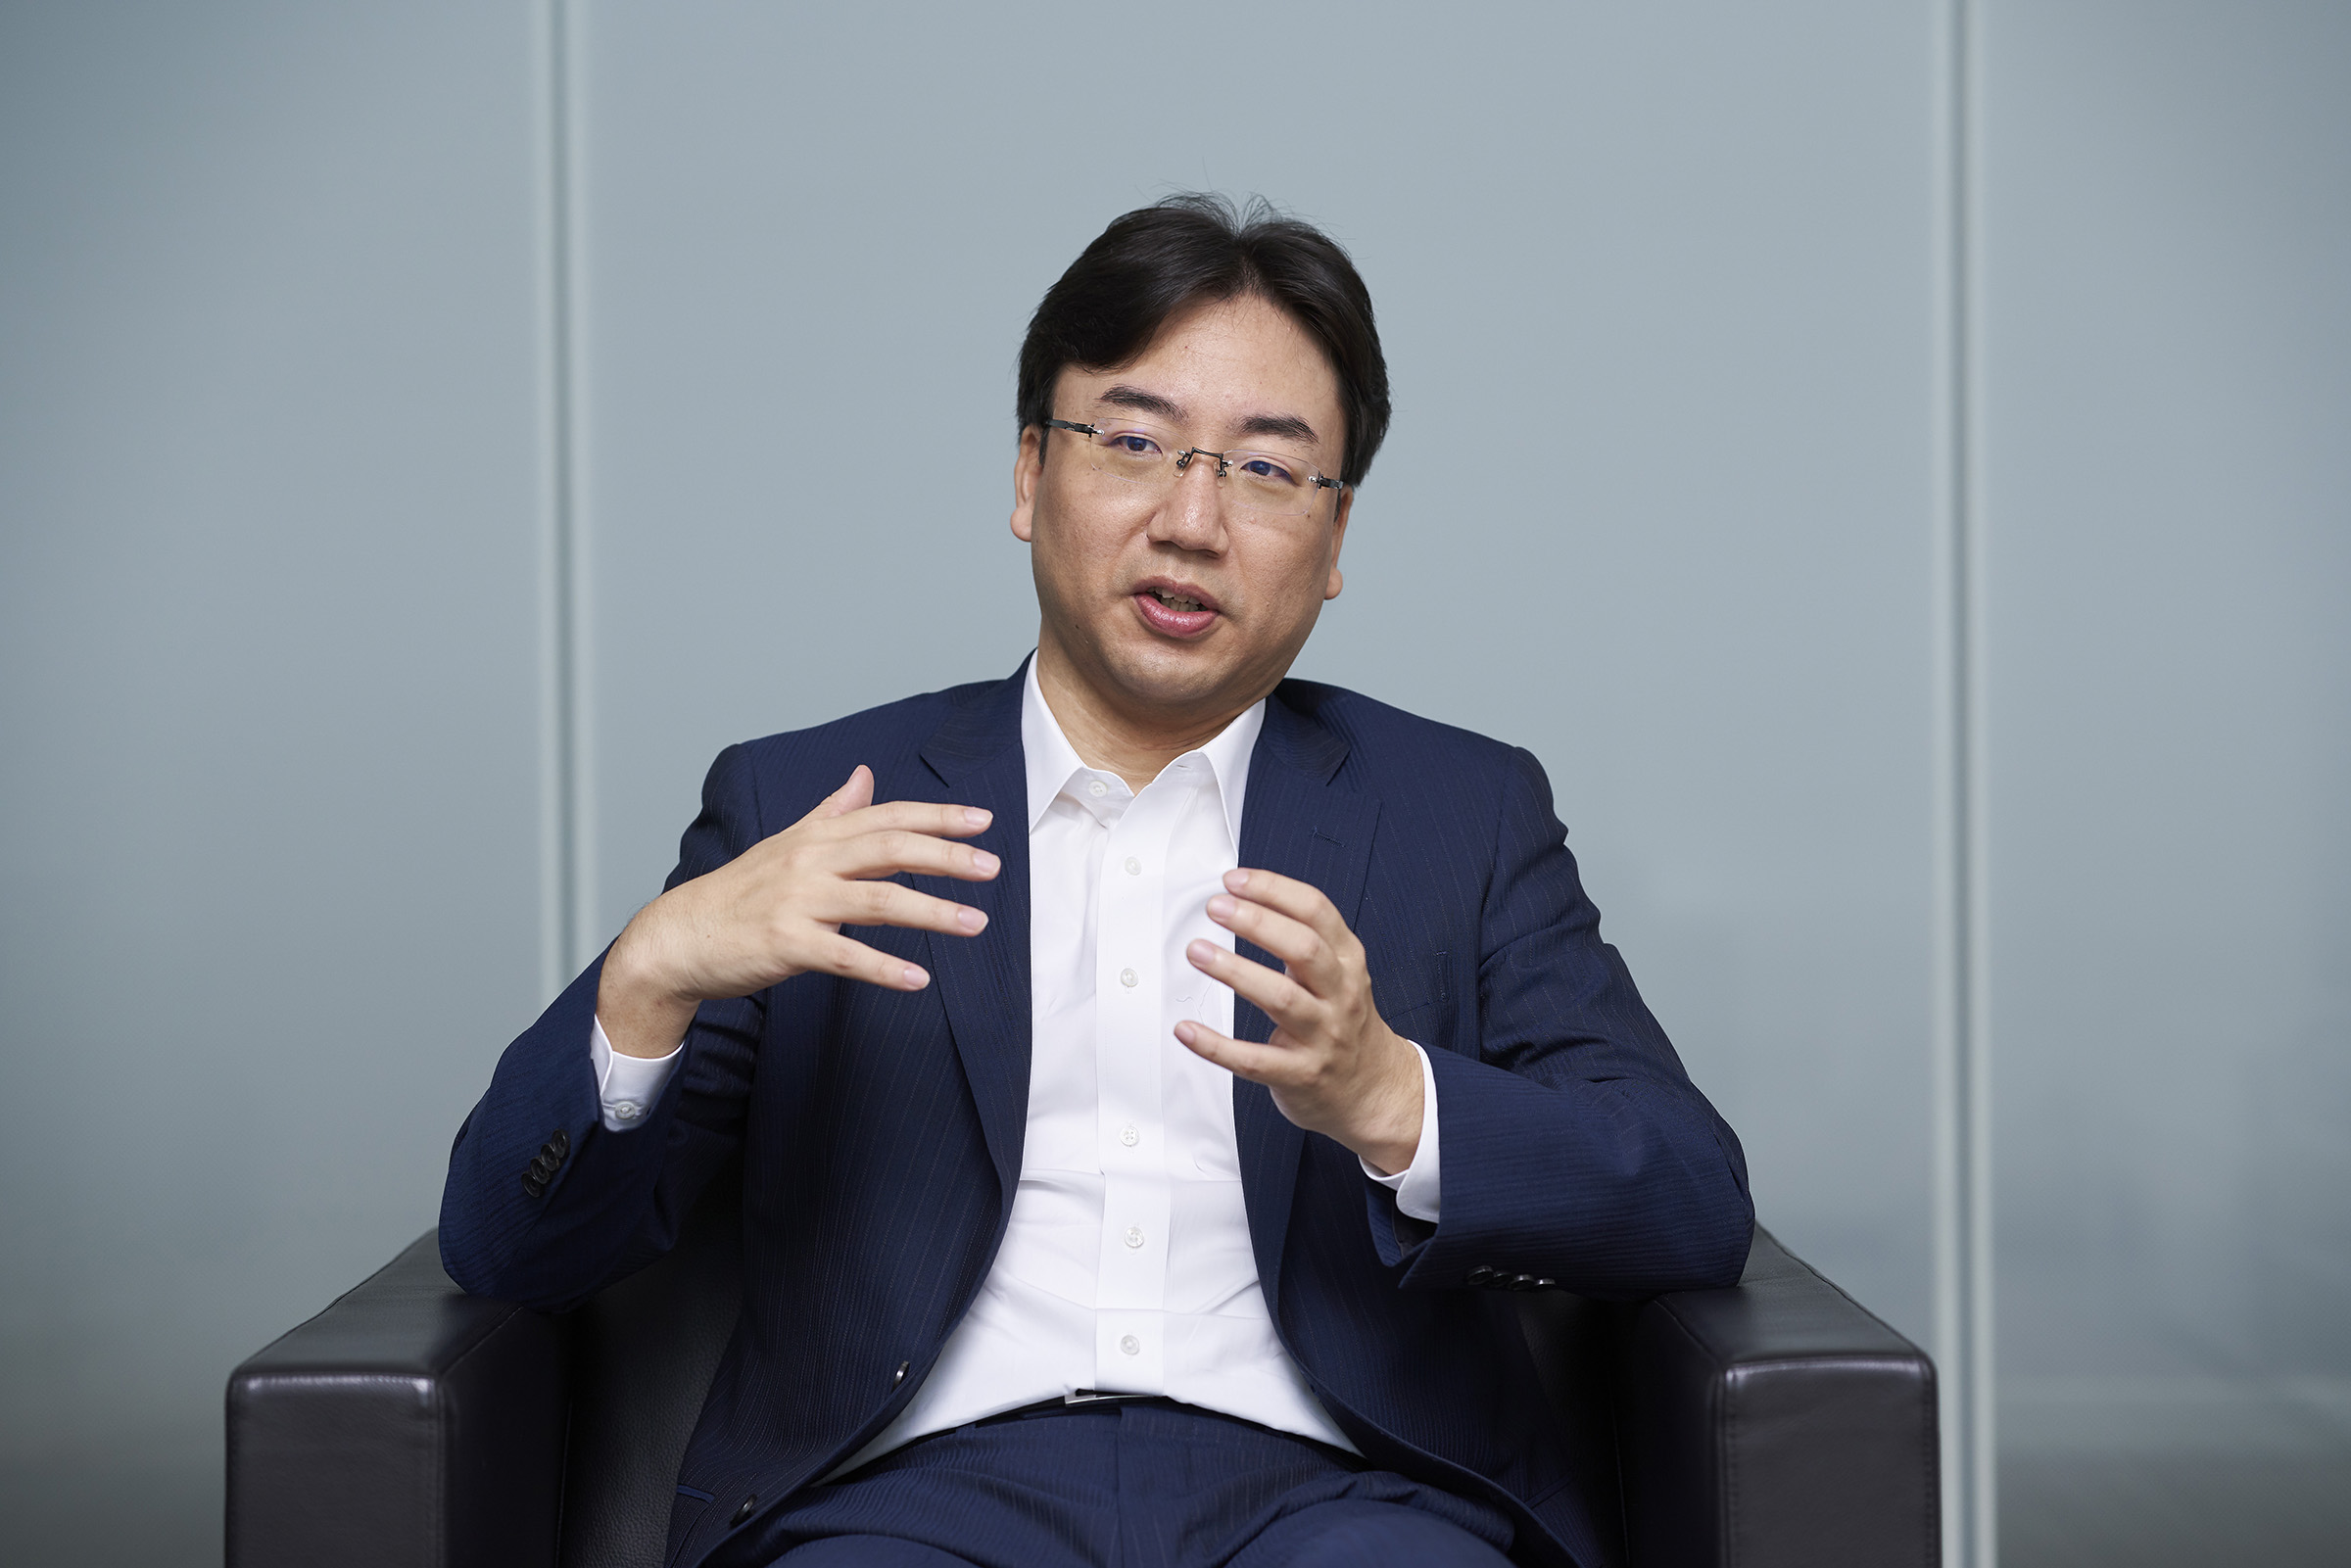 Shuntaro Furukawa, President of Nintendo Co., Ltd.